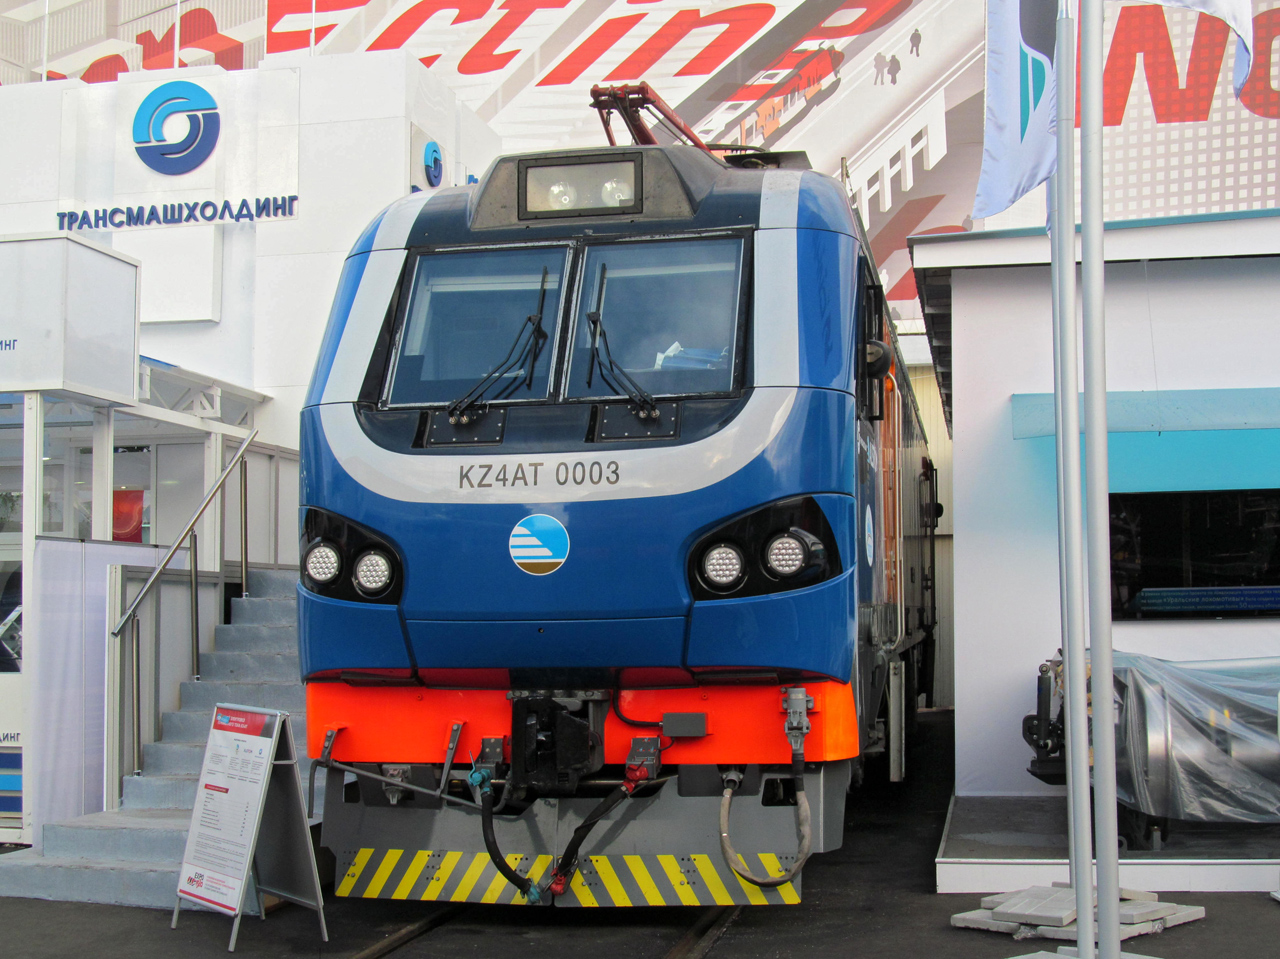 KZ4AT-0003; Moscow Railway — The 5th International Rail Salon EXPO 1520